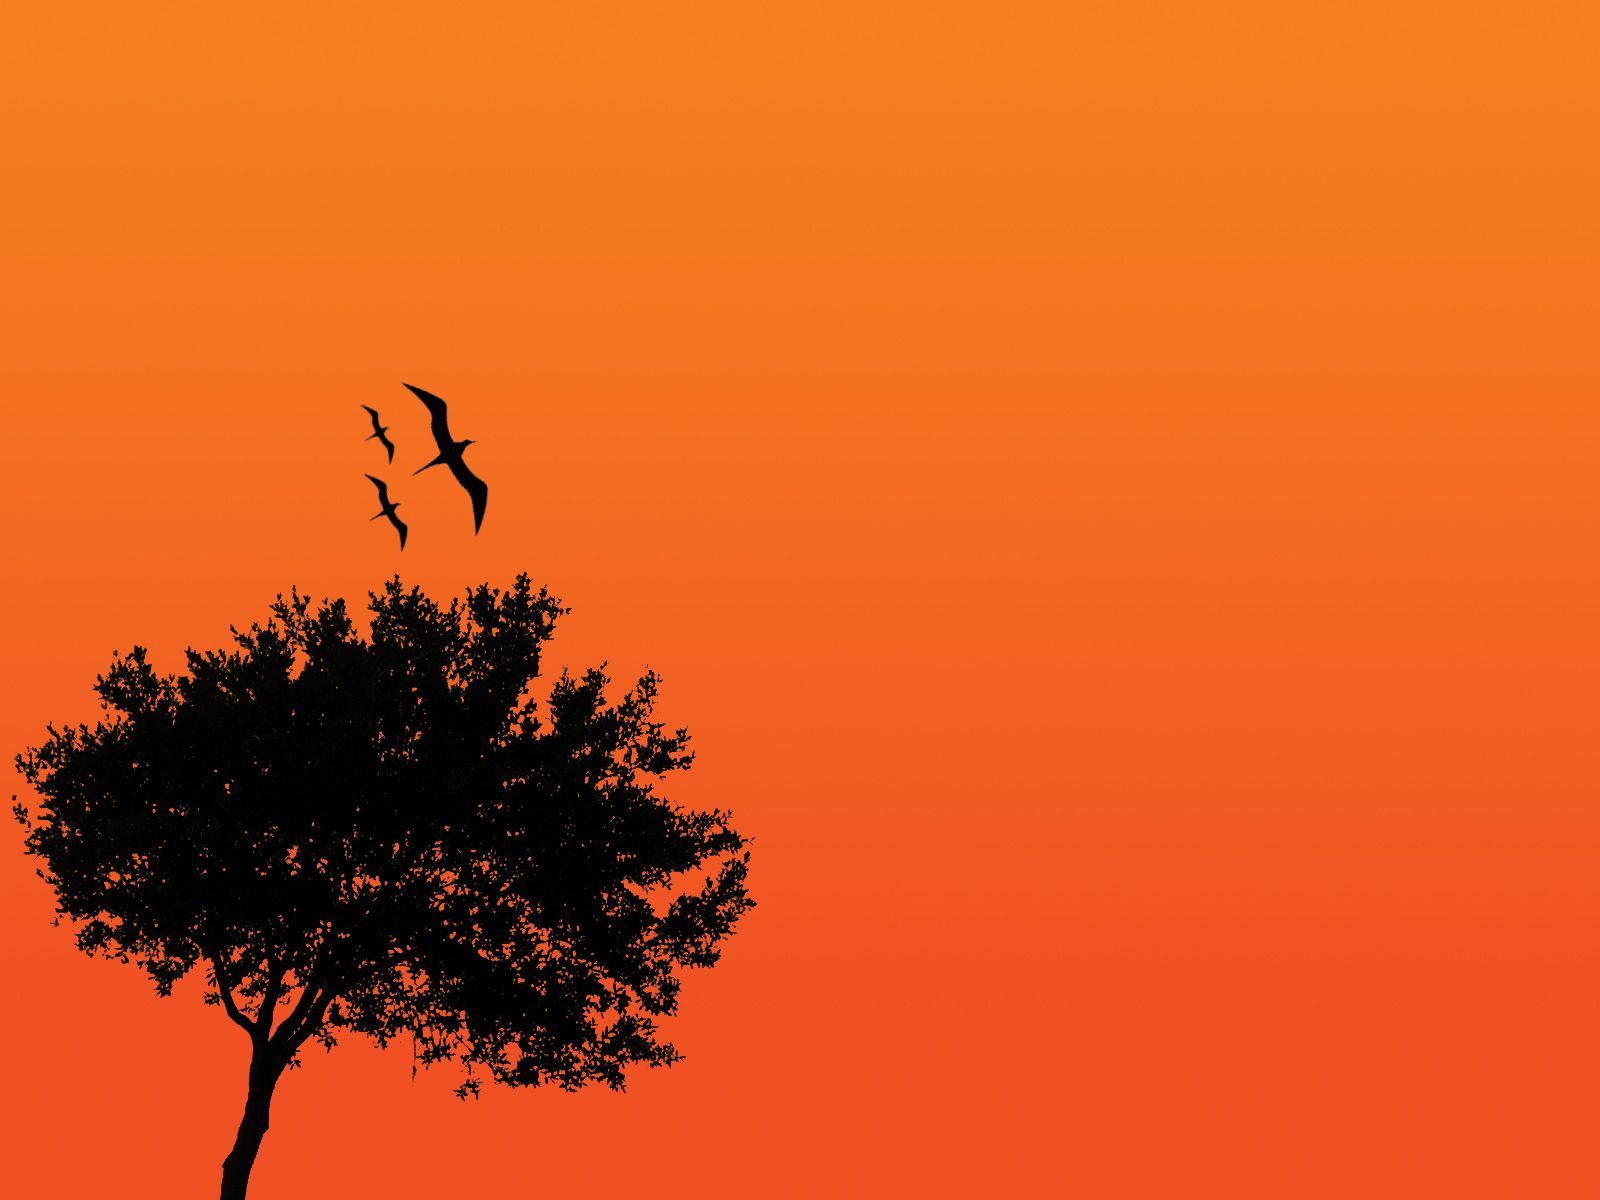 A tree and three birds silhouetted against a bright orange sky. - Dark orange